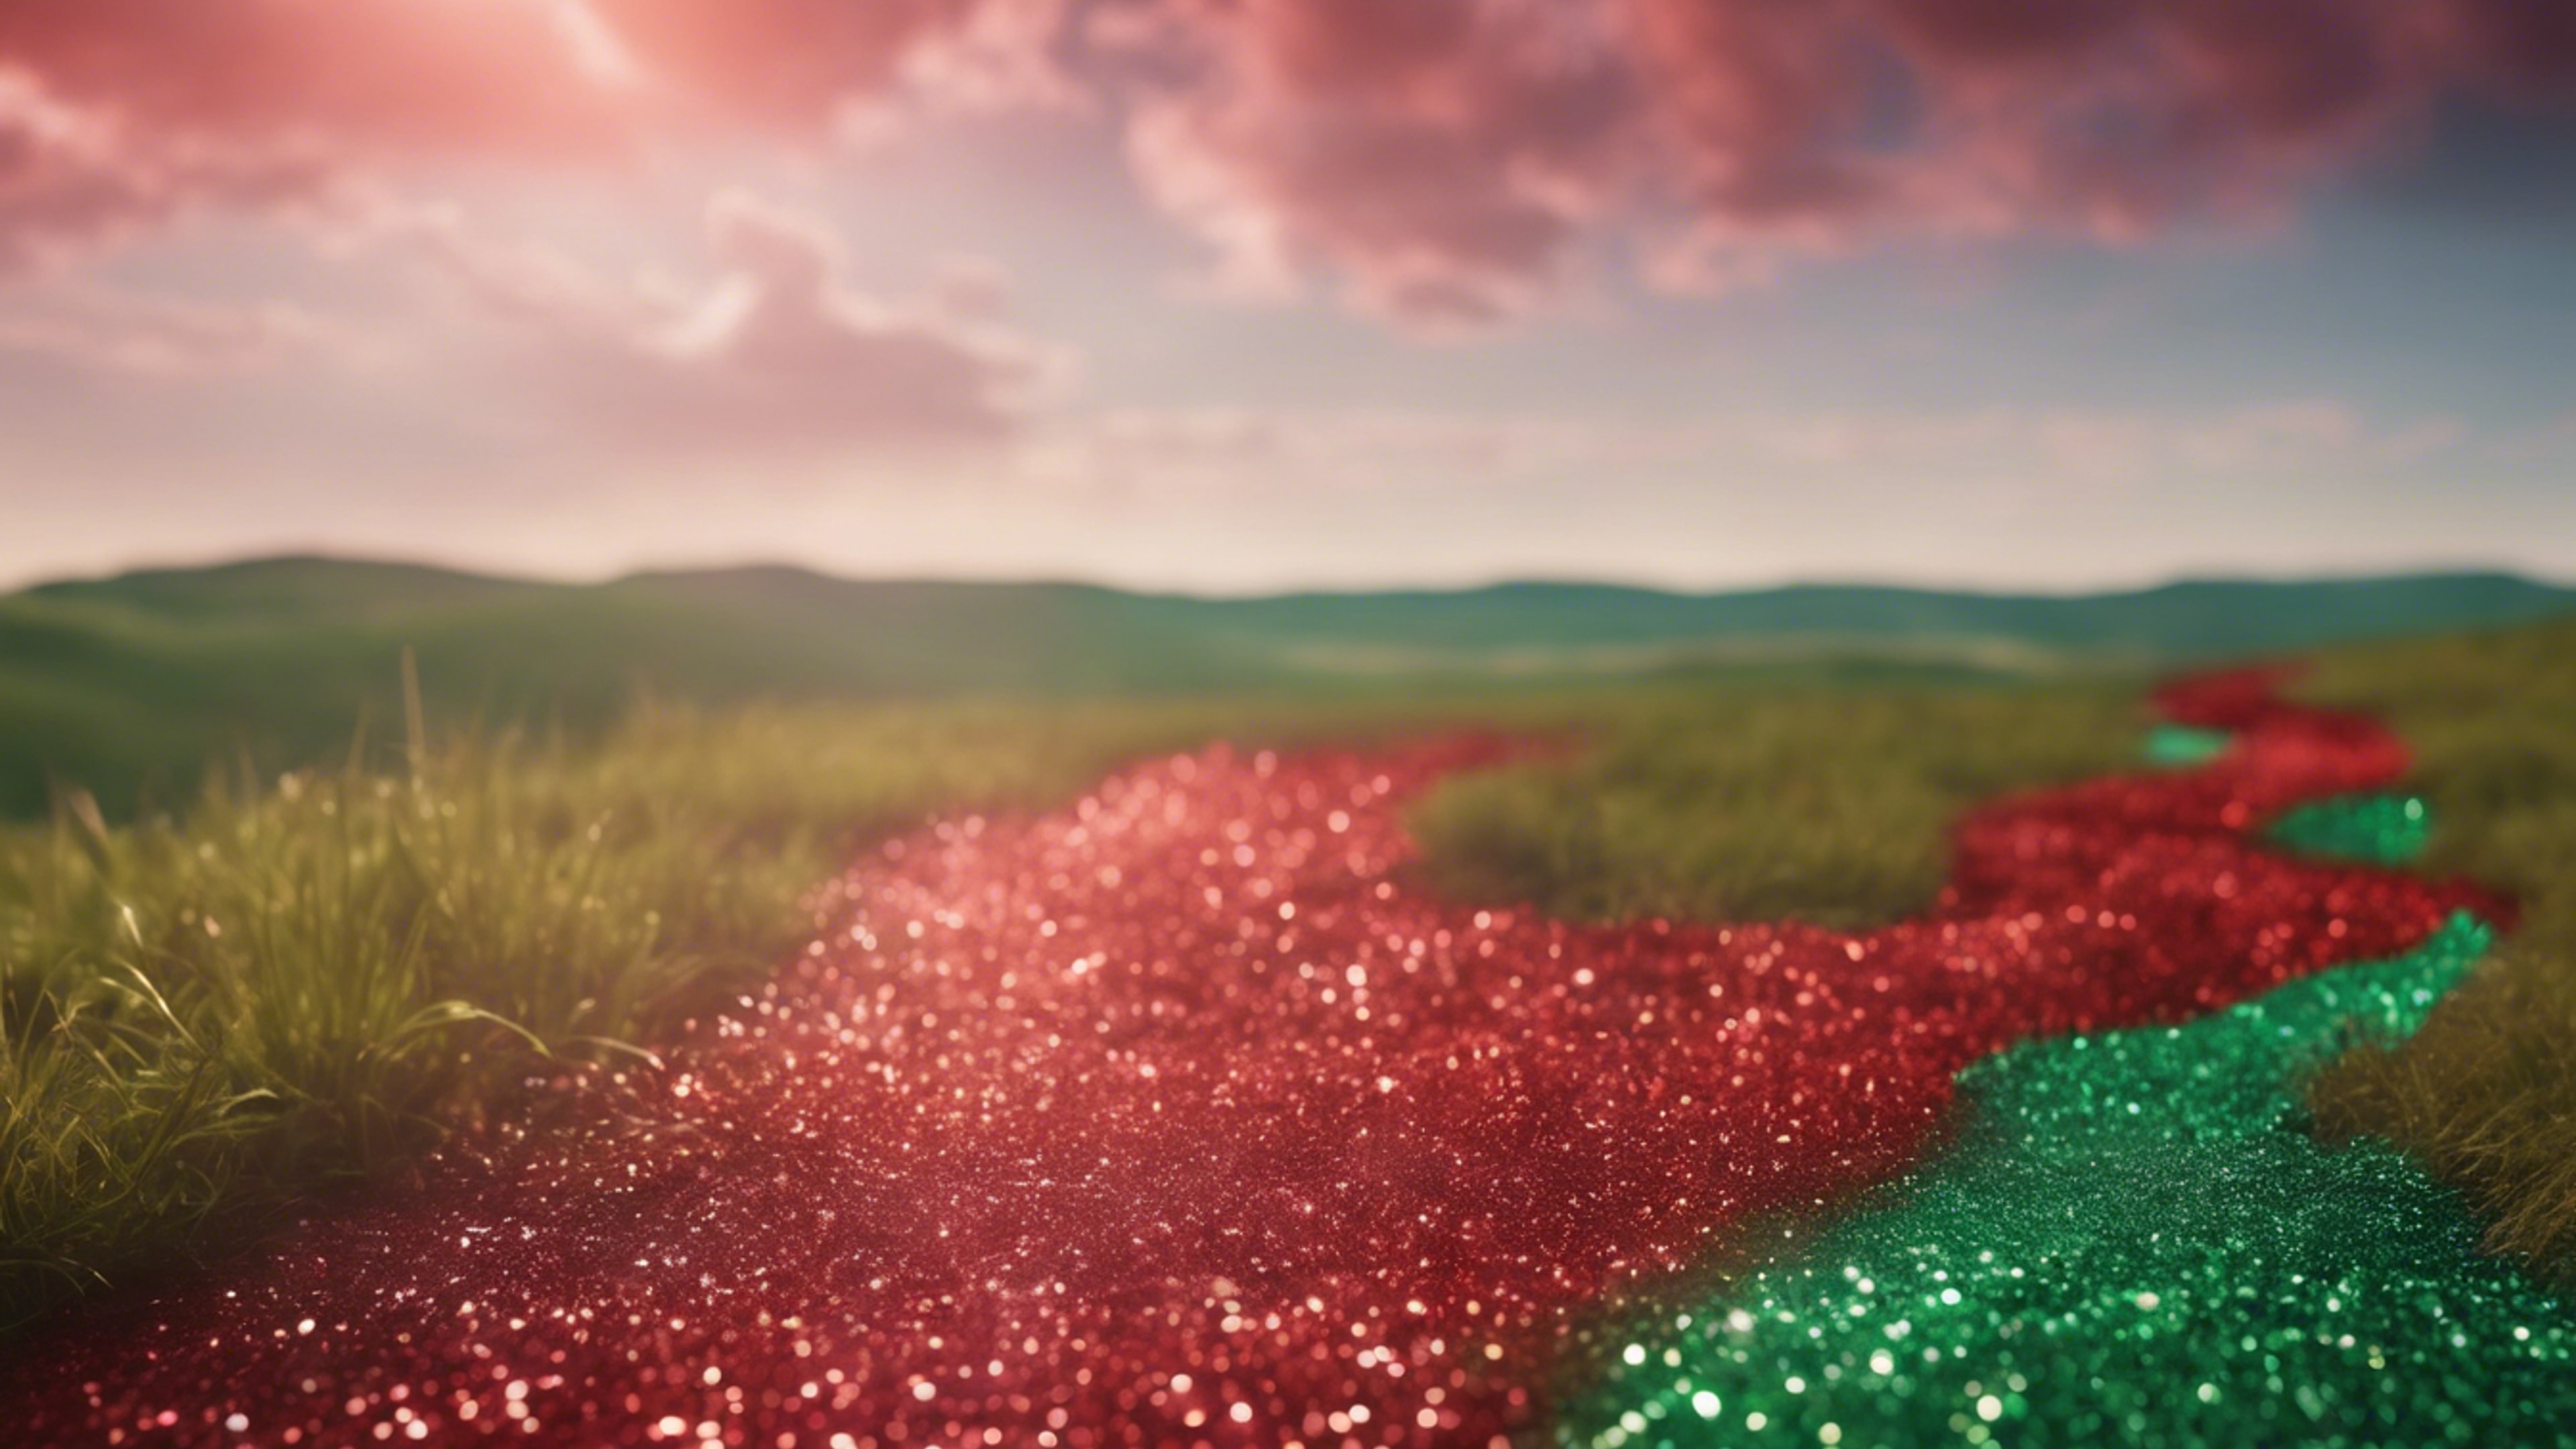 Path of shiny green and red glitter towards the horizon Kertas dinding[4b670e6c3f1f43adb6d1]